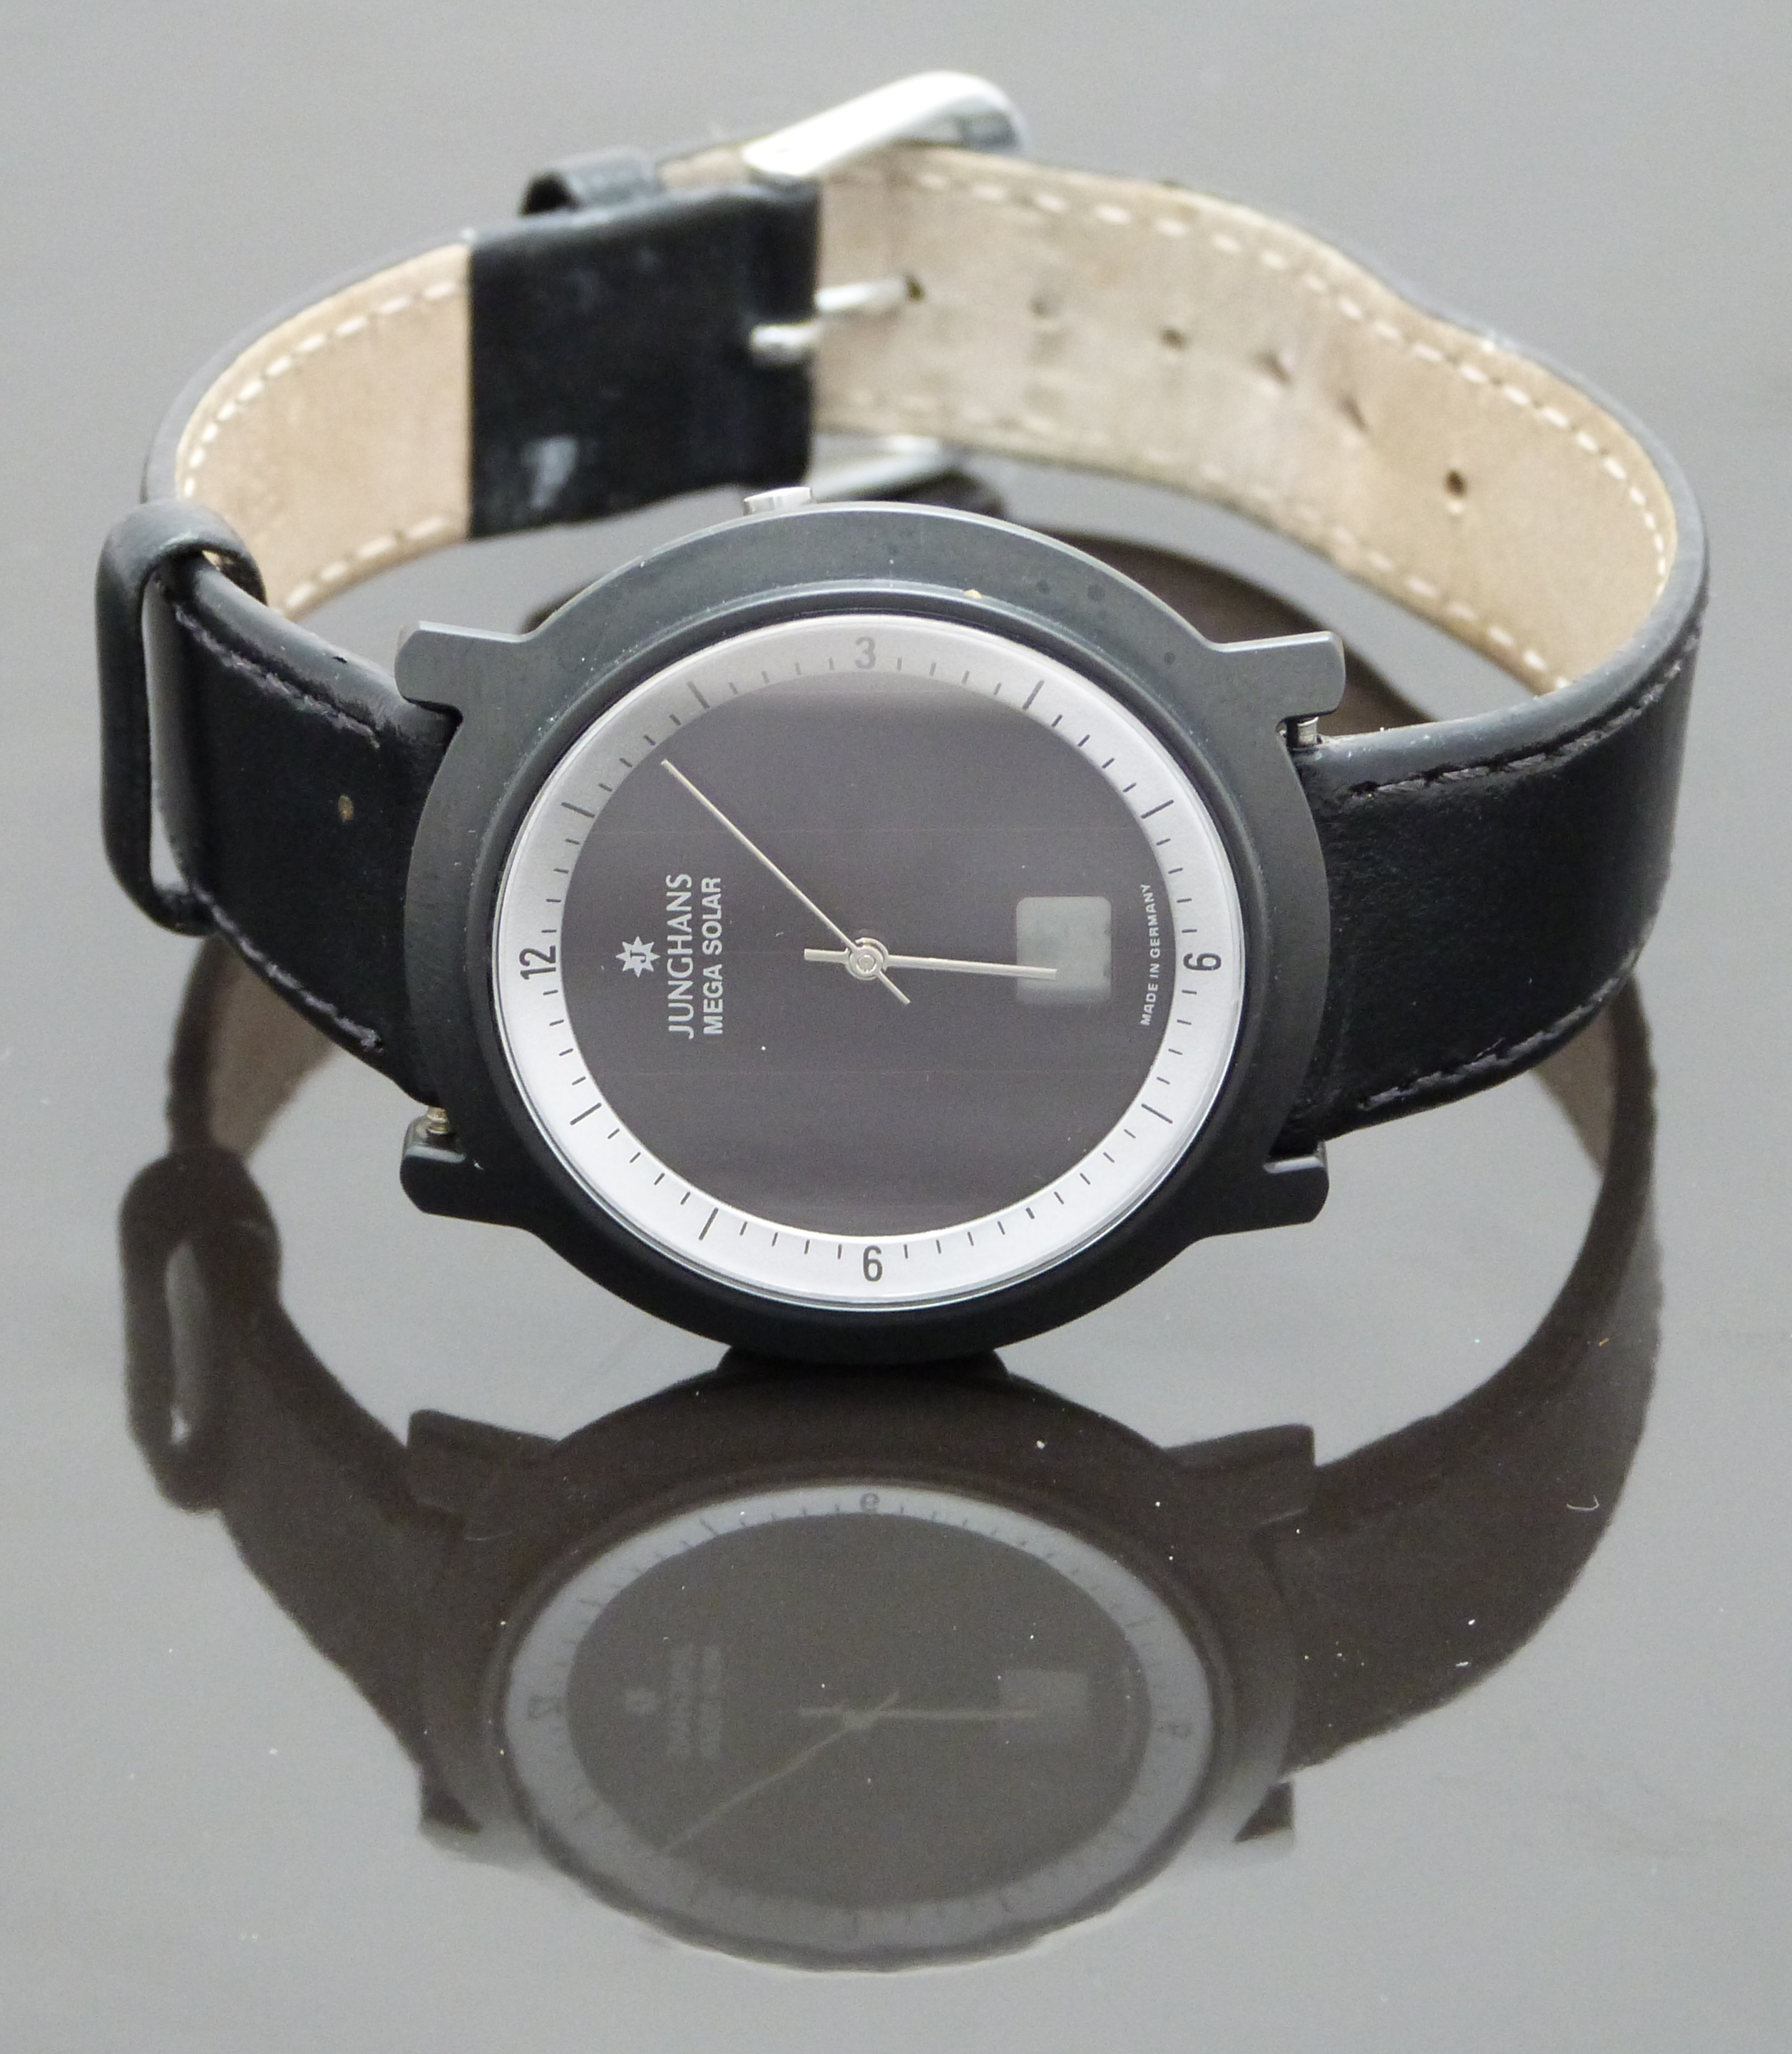 Junghans Mega Solar gentleman's wristwatch with stainless steel hands, silver inner bezel, digital - Image 2 of 4